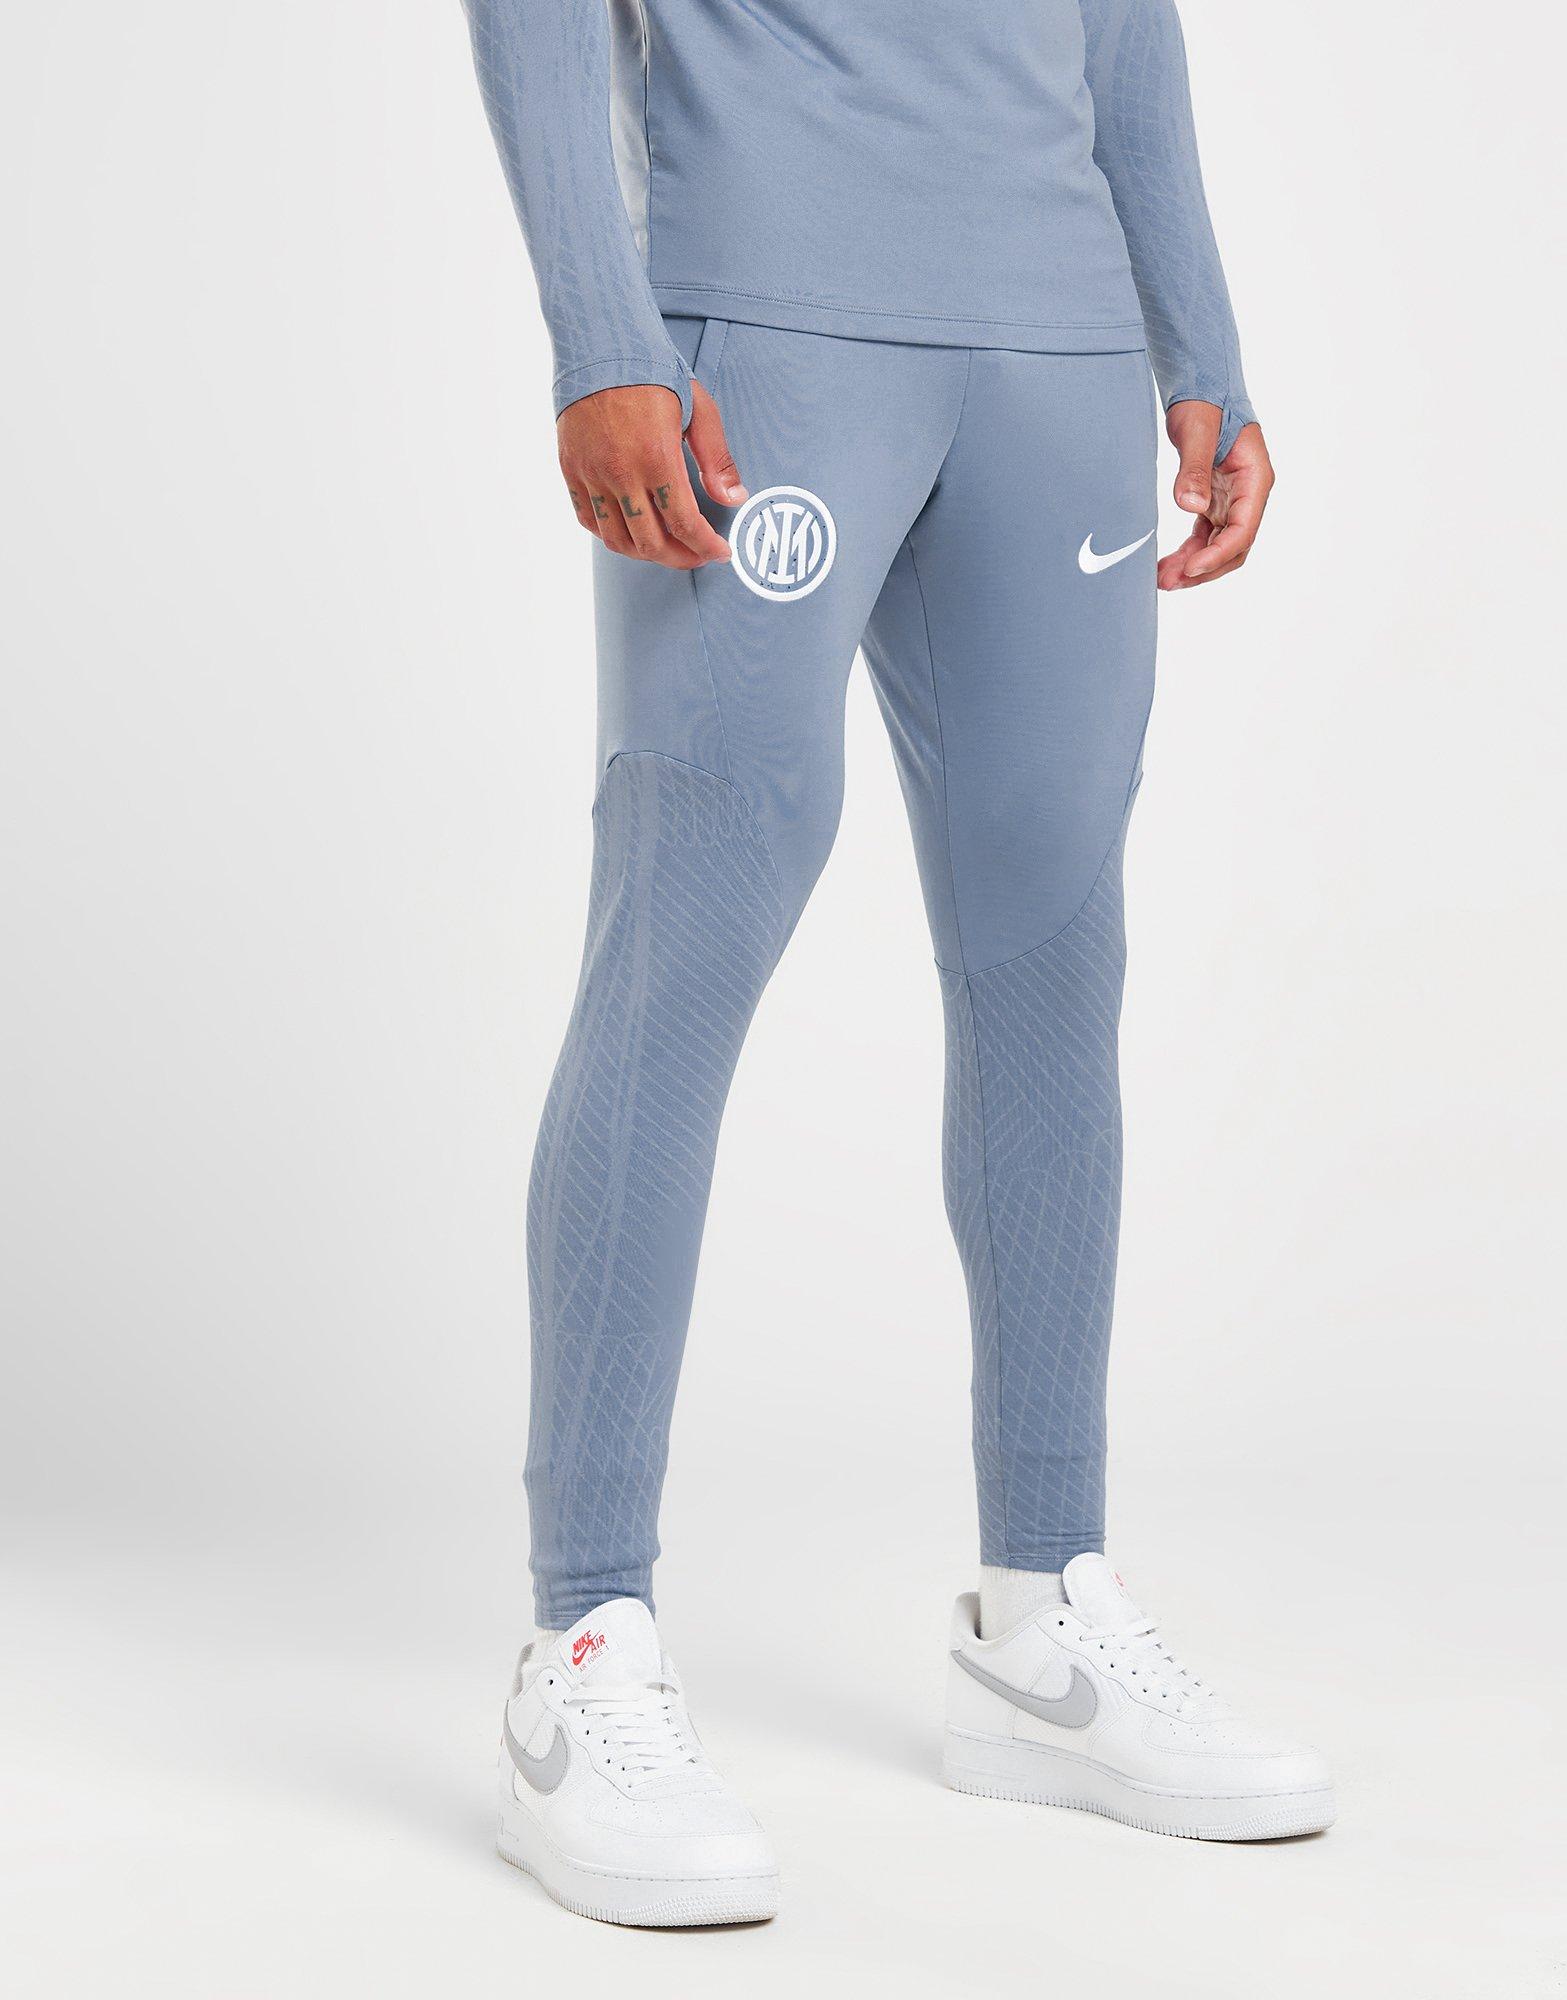 Nike Pro Hyperwarm Tights Leggings Running Medium M - $148